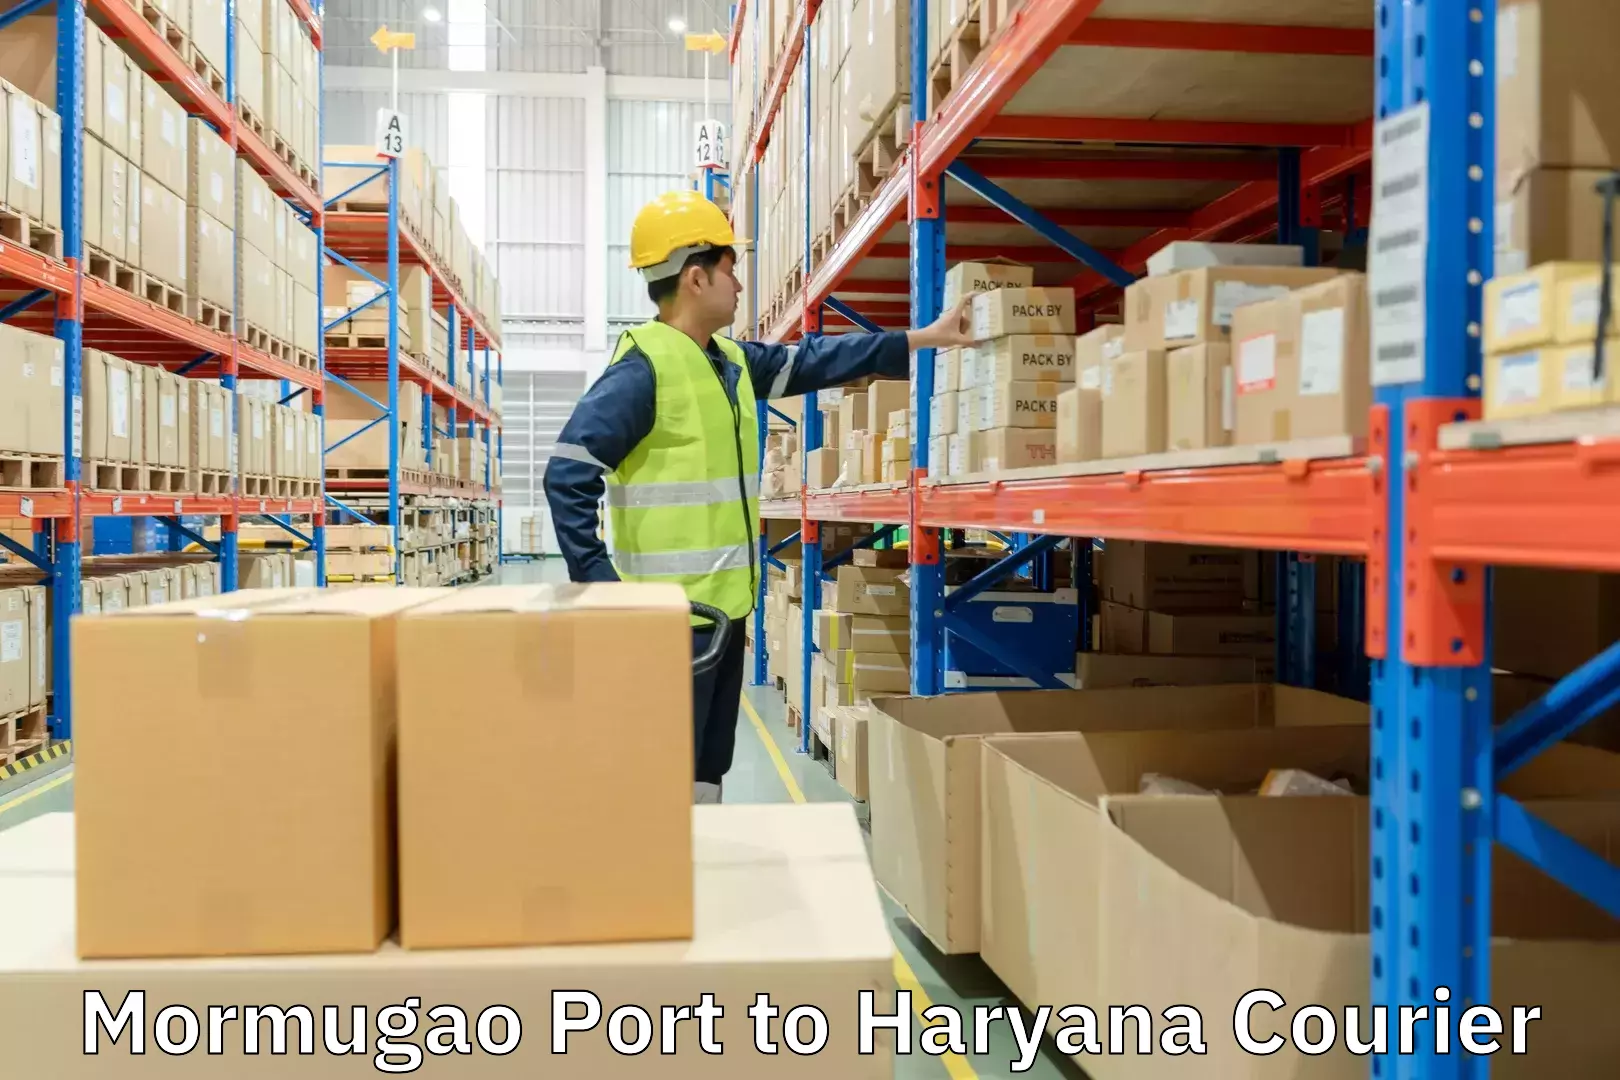 Express logistics service Mormugao Port to Haryana